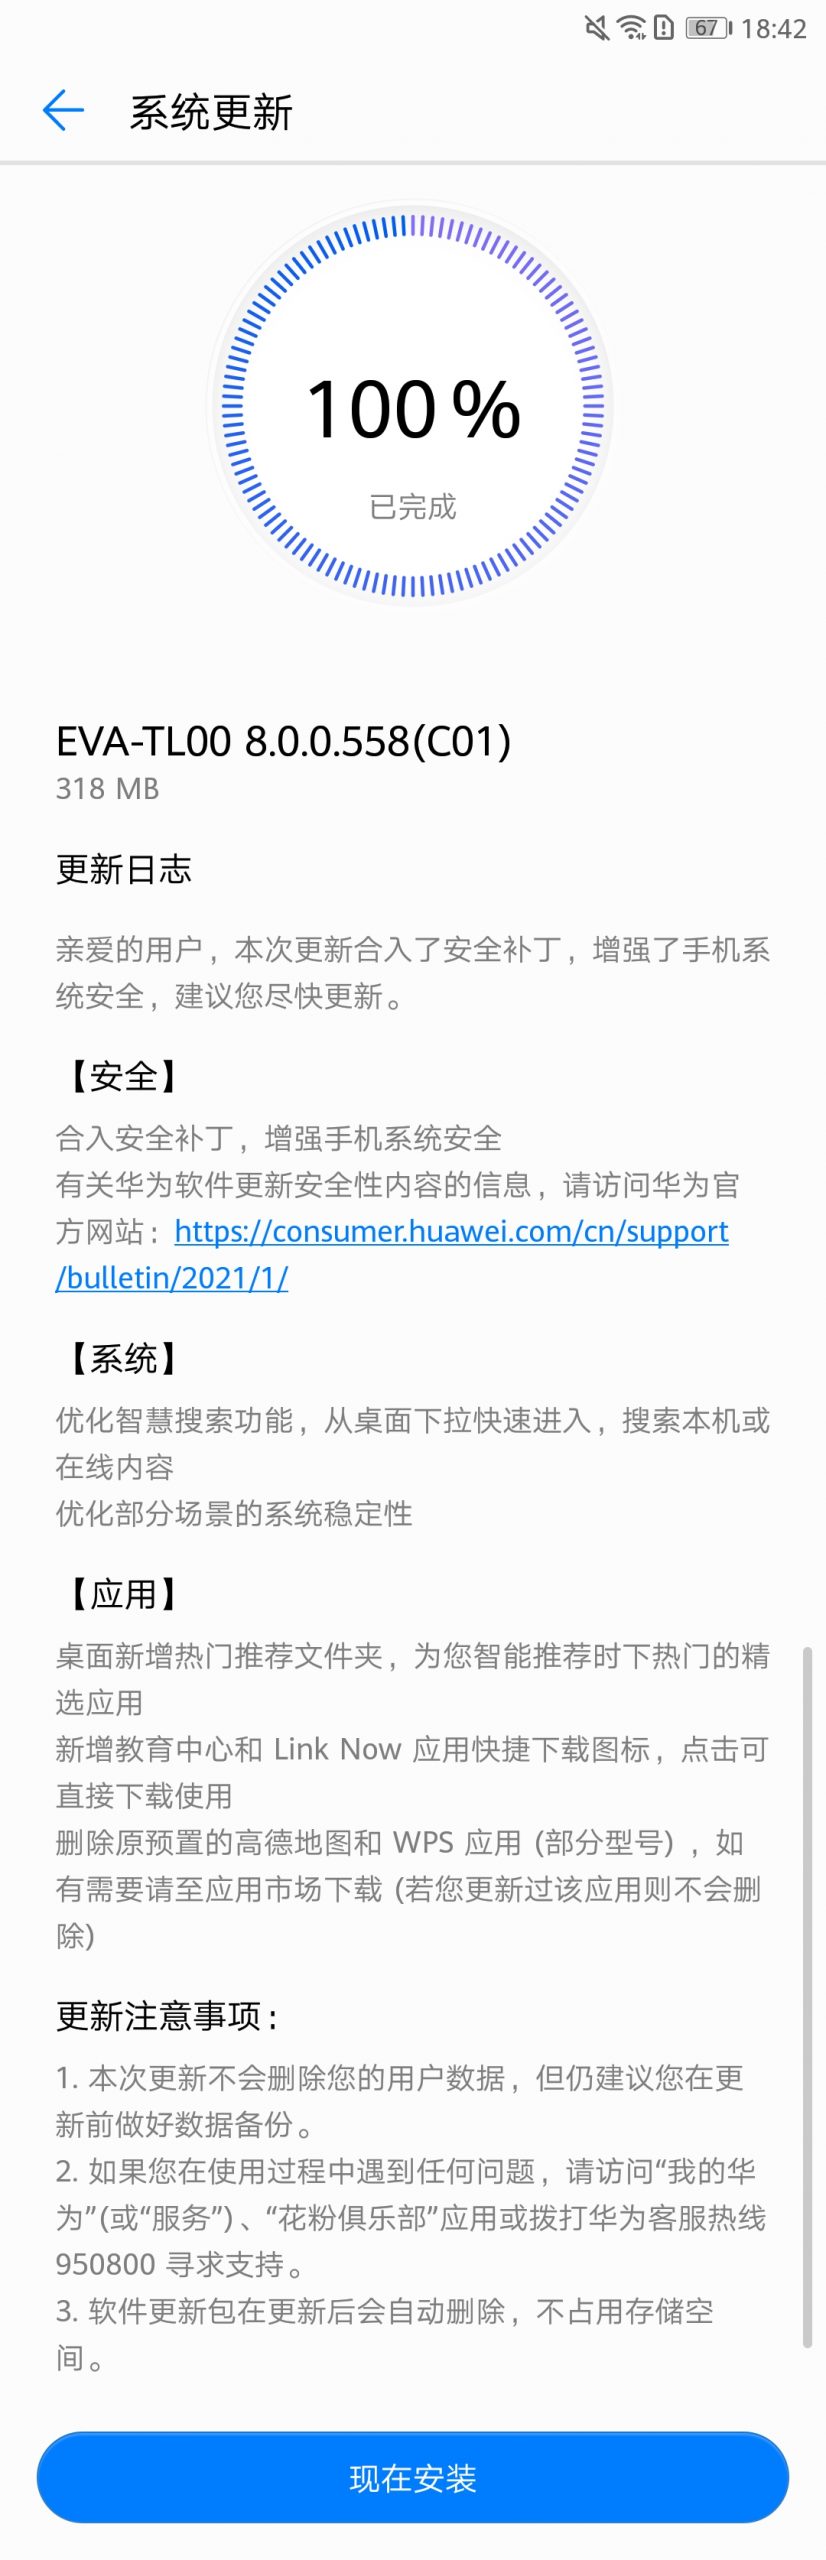 Huawei P9 getting EMUI 8.0.0.558